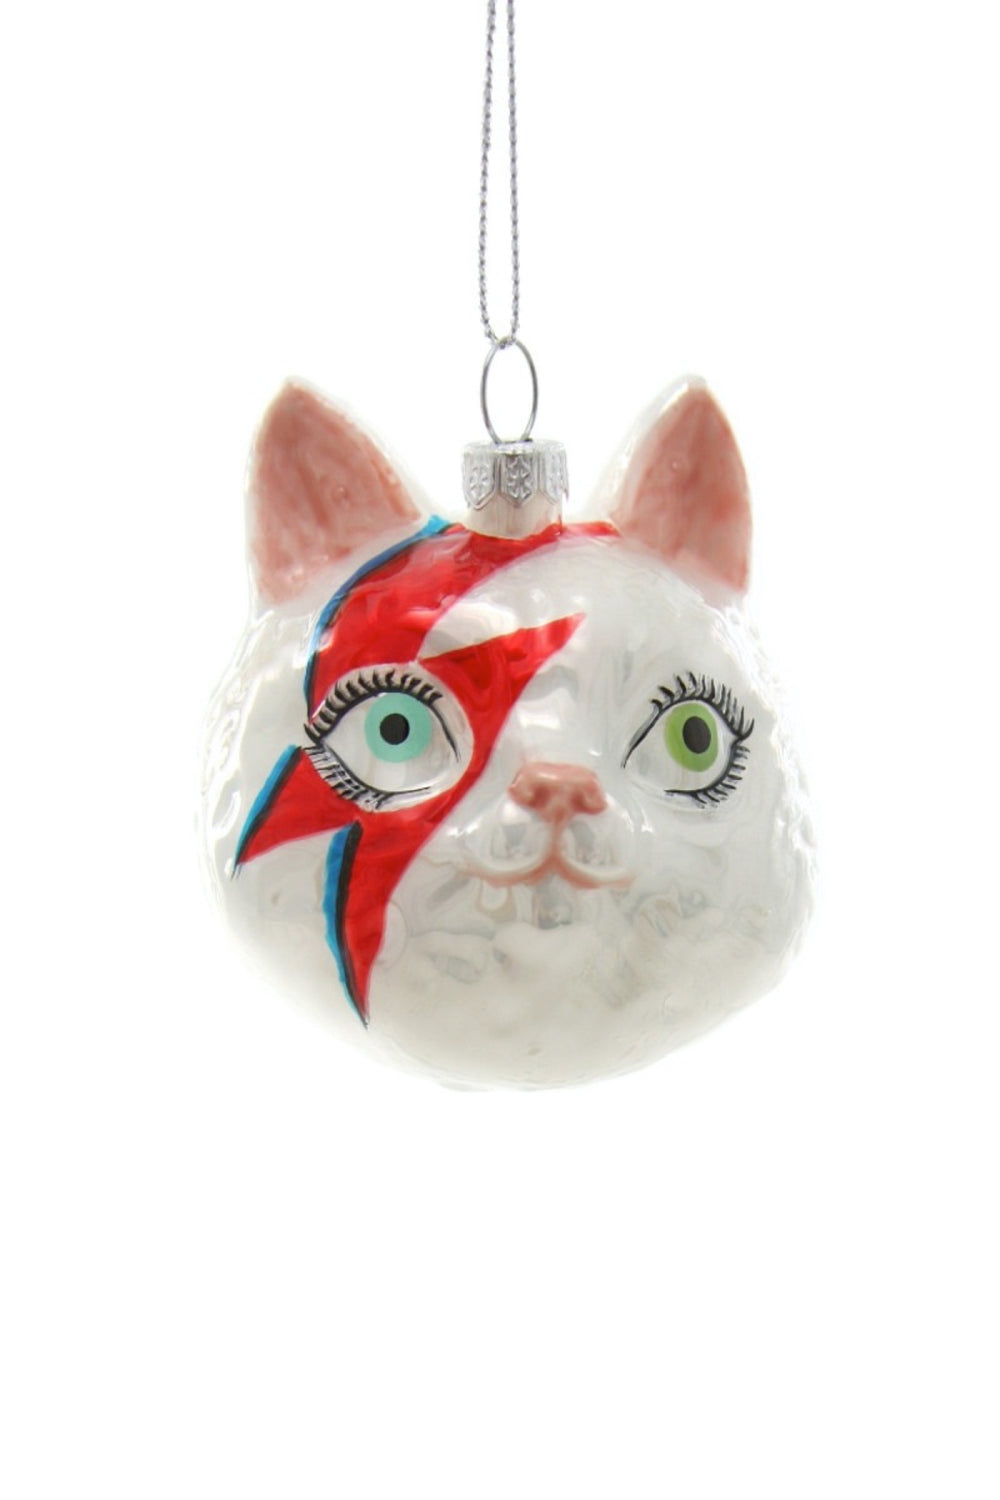 Meowie Bowie Ornament